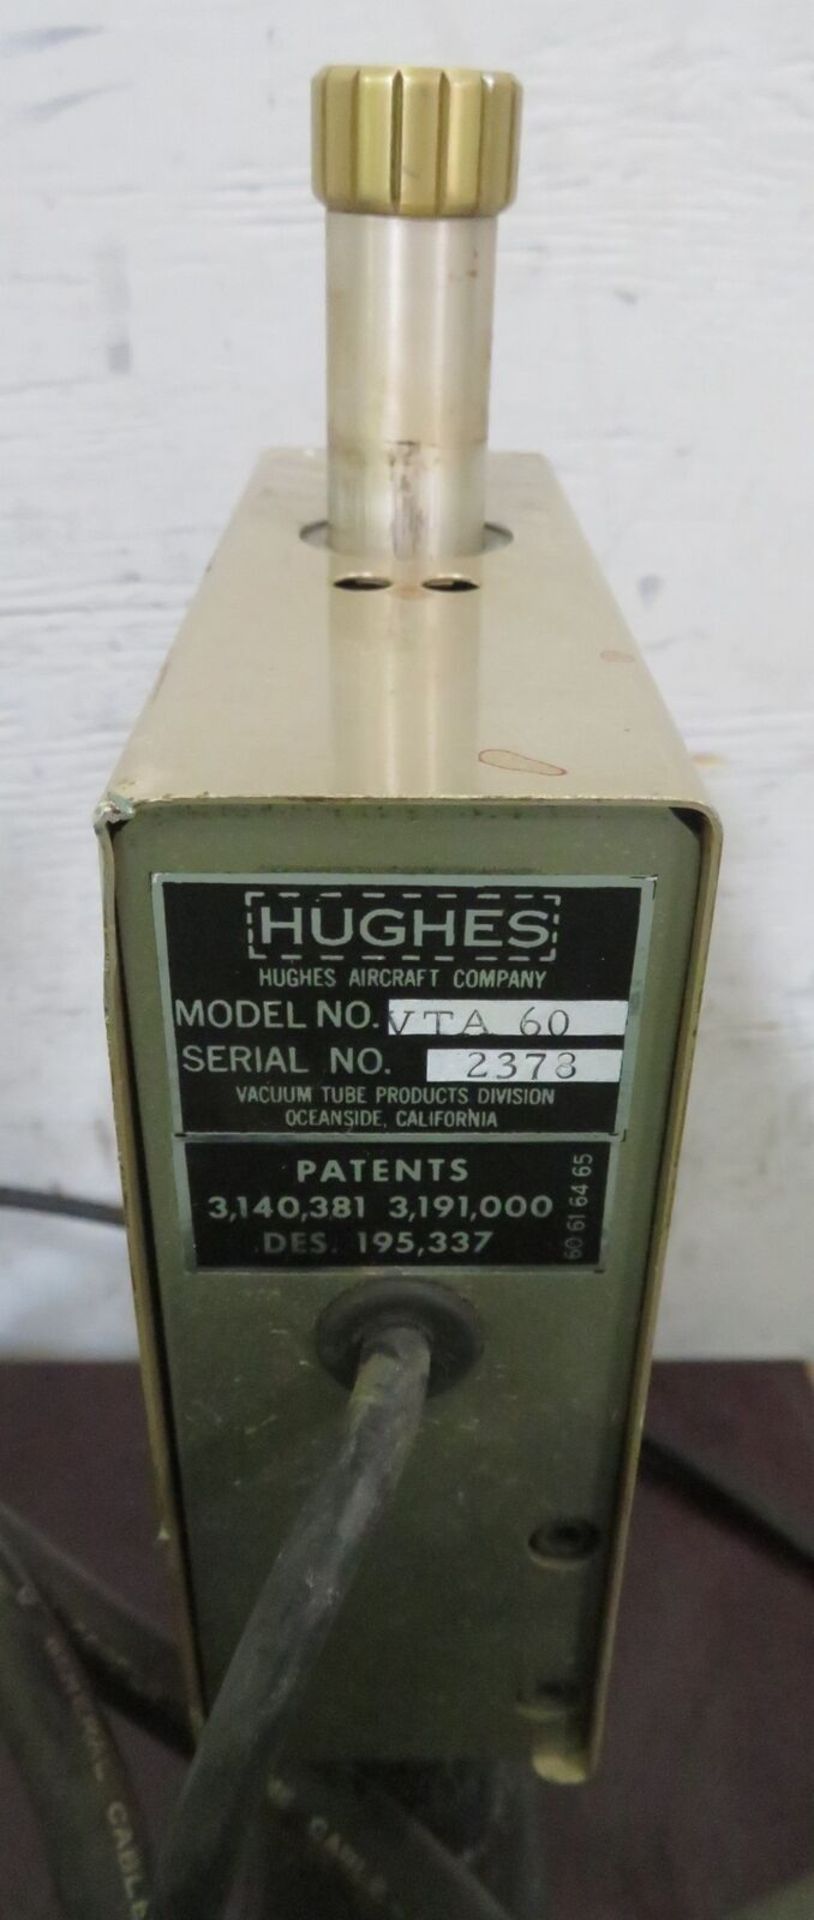 Hughes HRW-100 100-Watt-Second Welding Power Supply w/ VTA-60 Weld Head - Image 9 of 10